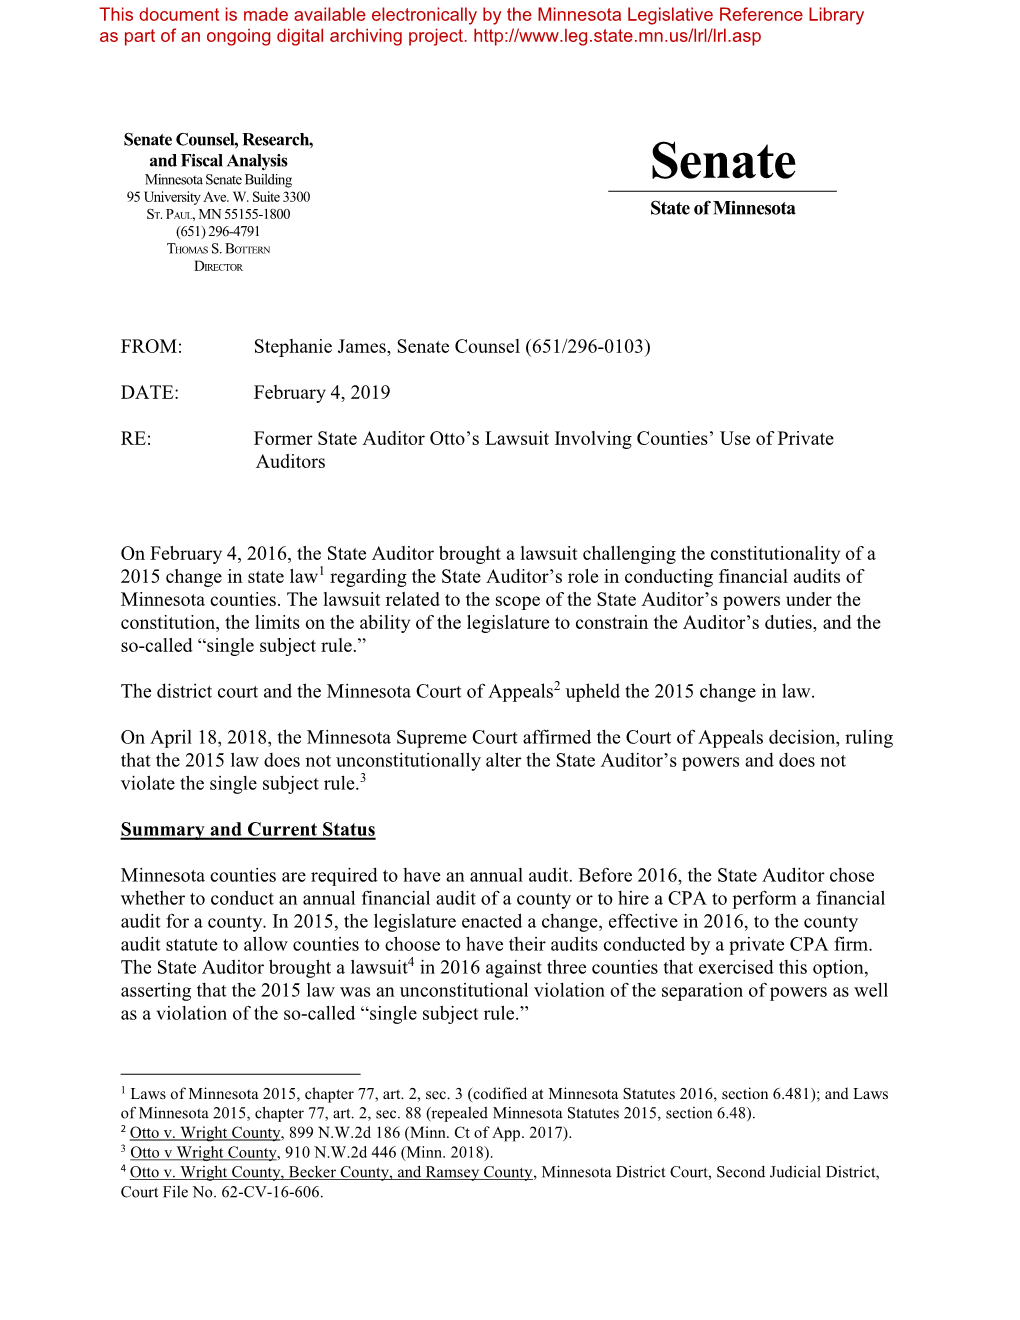 Senate Counsel, Research, and Fiscal Analysis Minnesota Senate Building Senate 95 University Ave